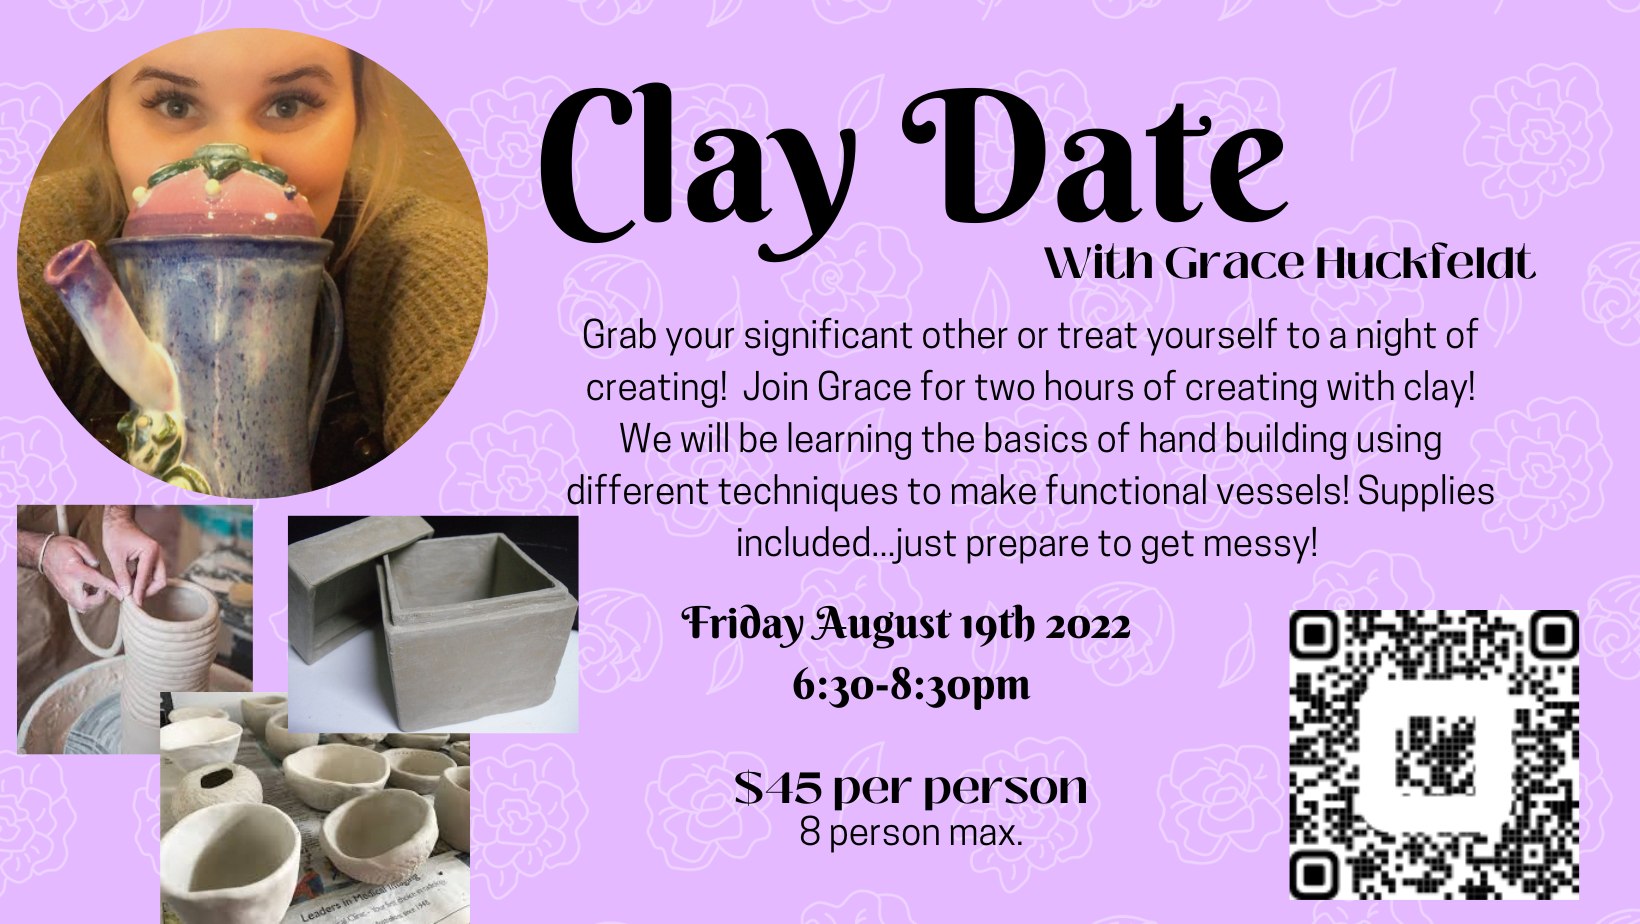 Clay Date at Forming Art Studios